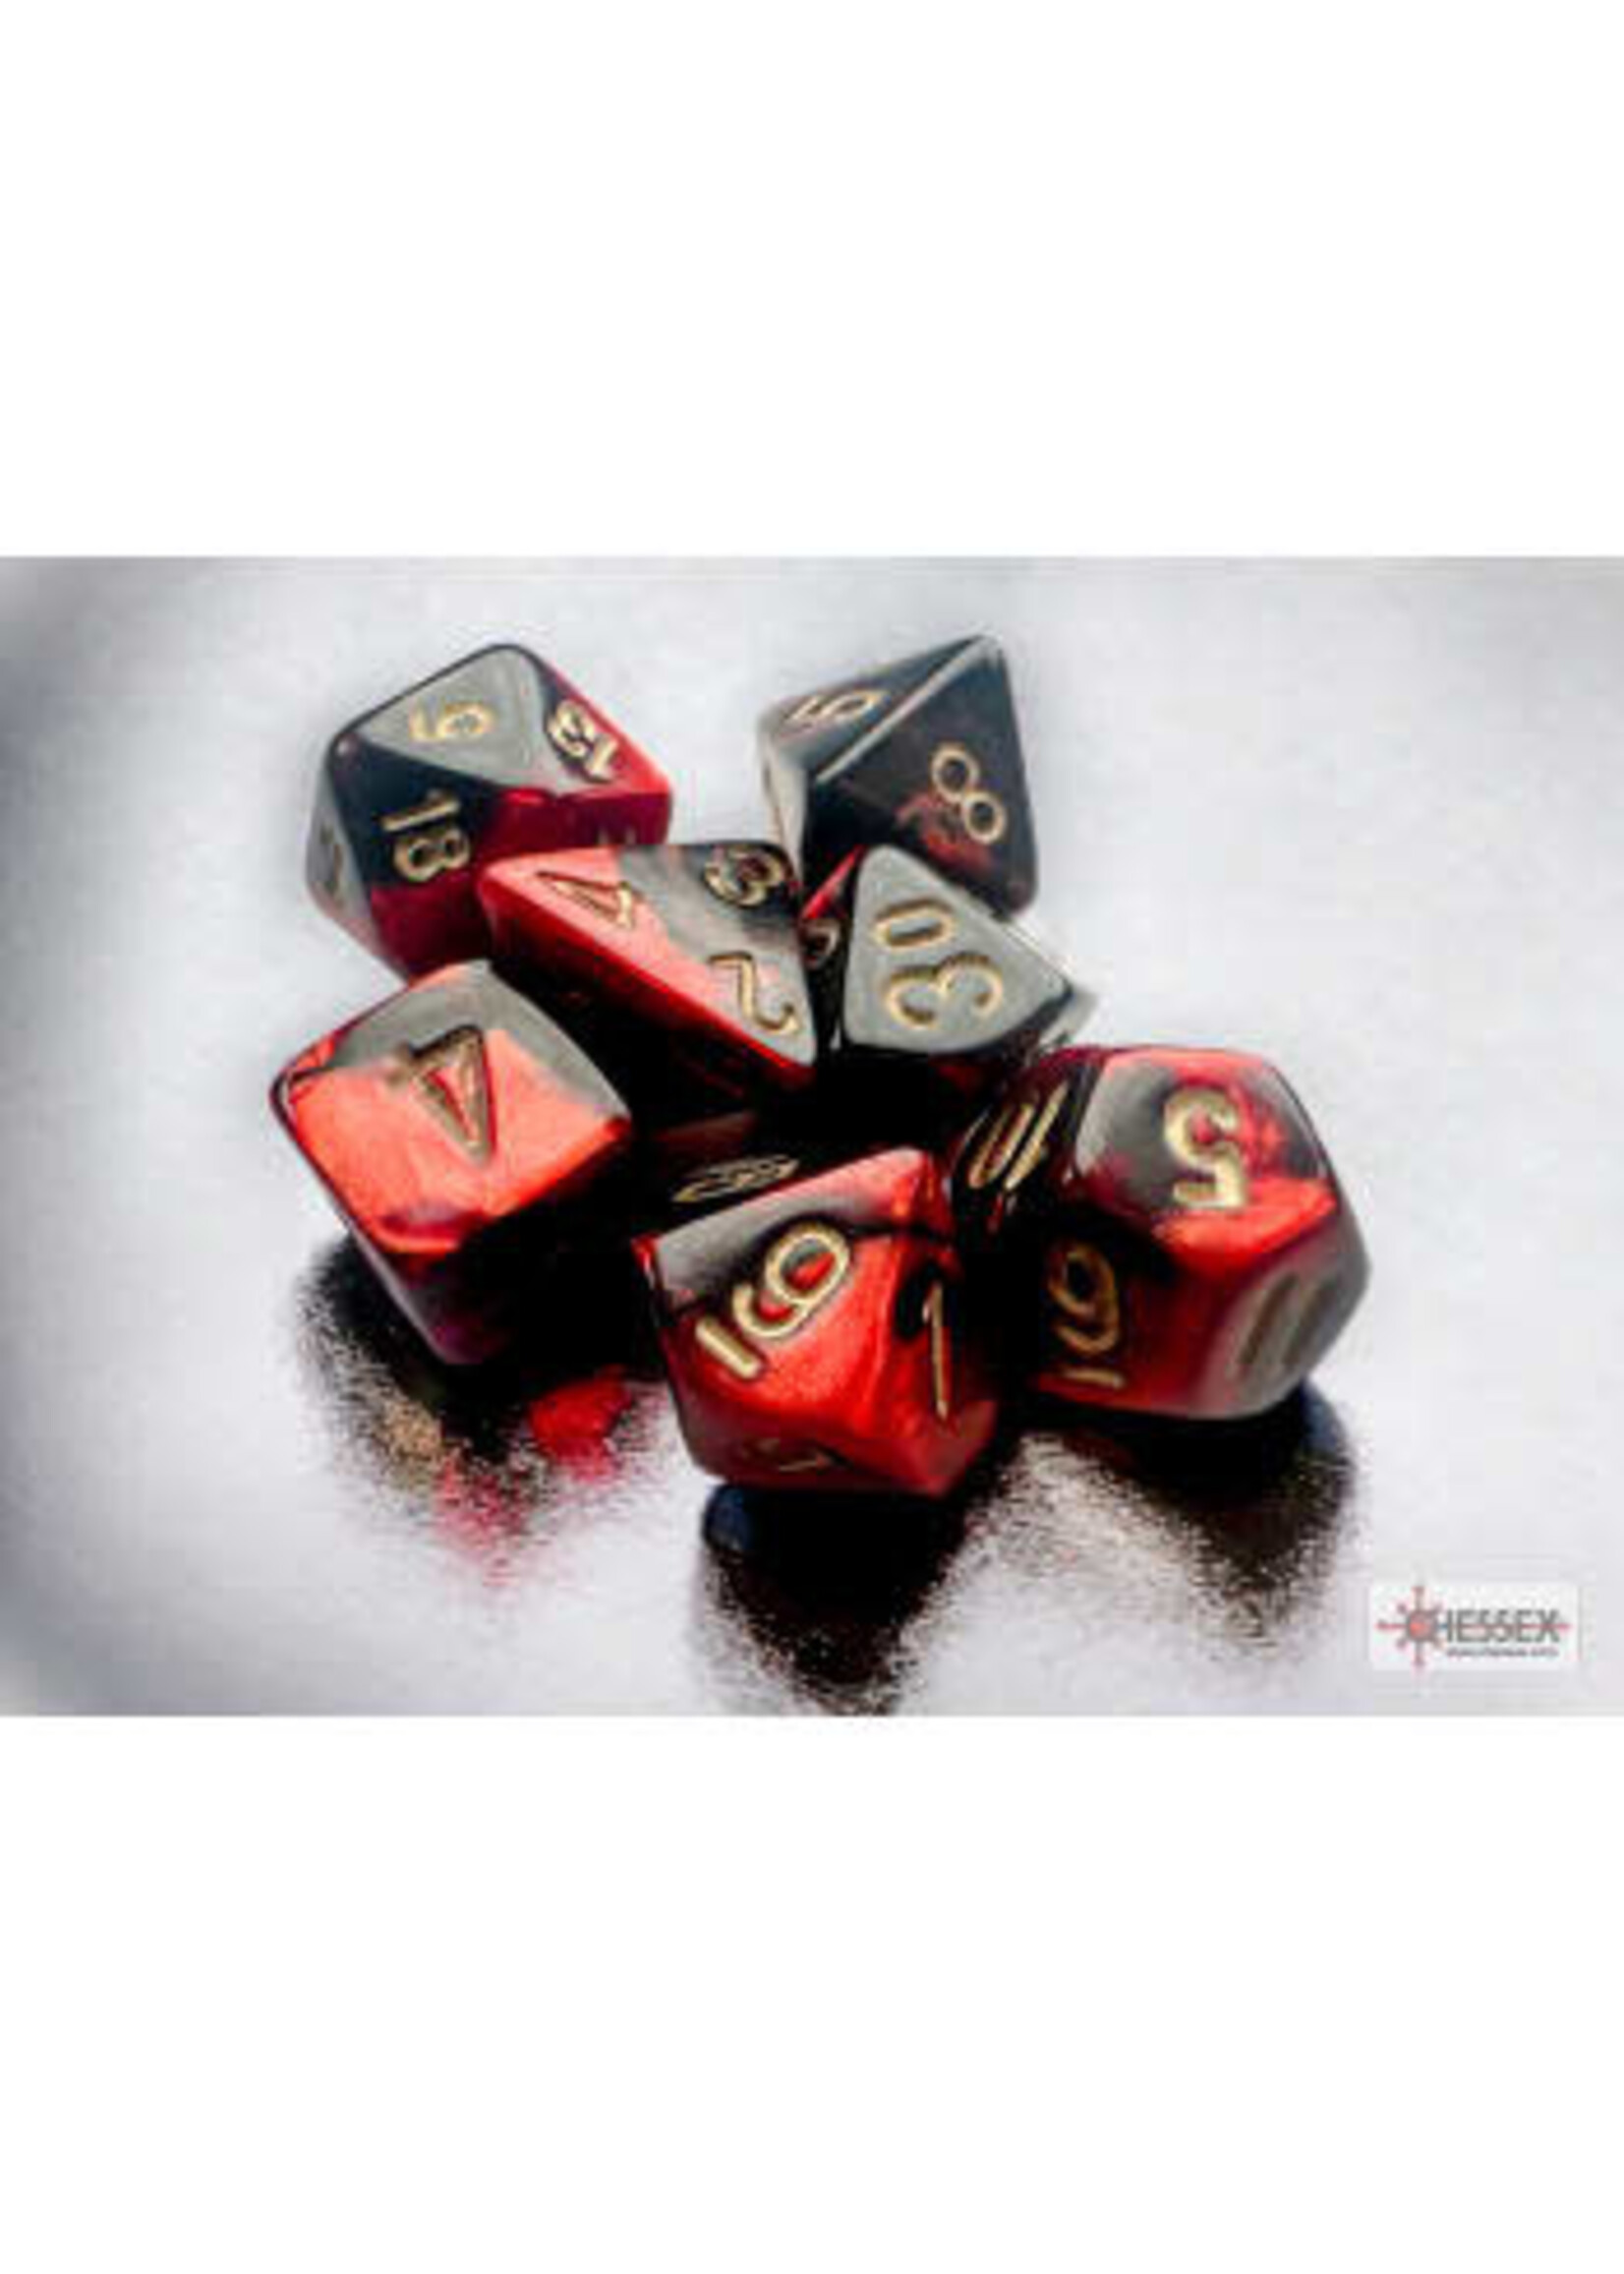 Chessex Gemini Mini 7 Set: Black & Red w/ gold